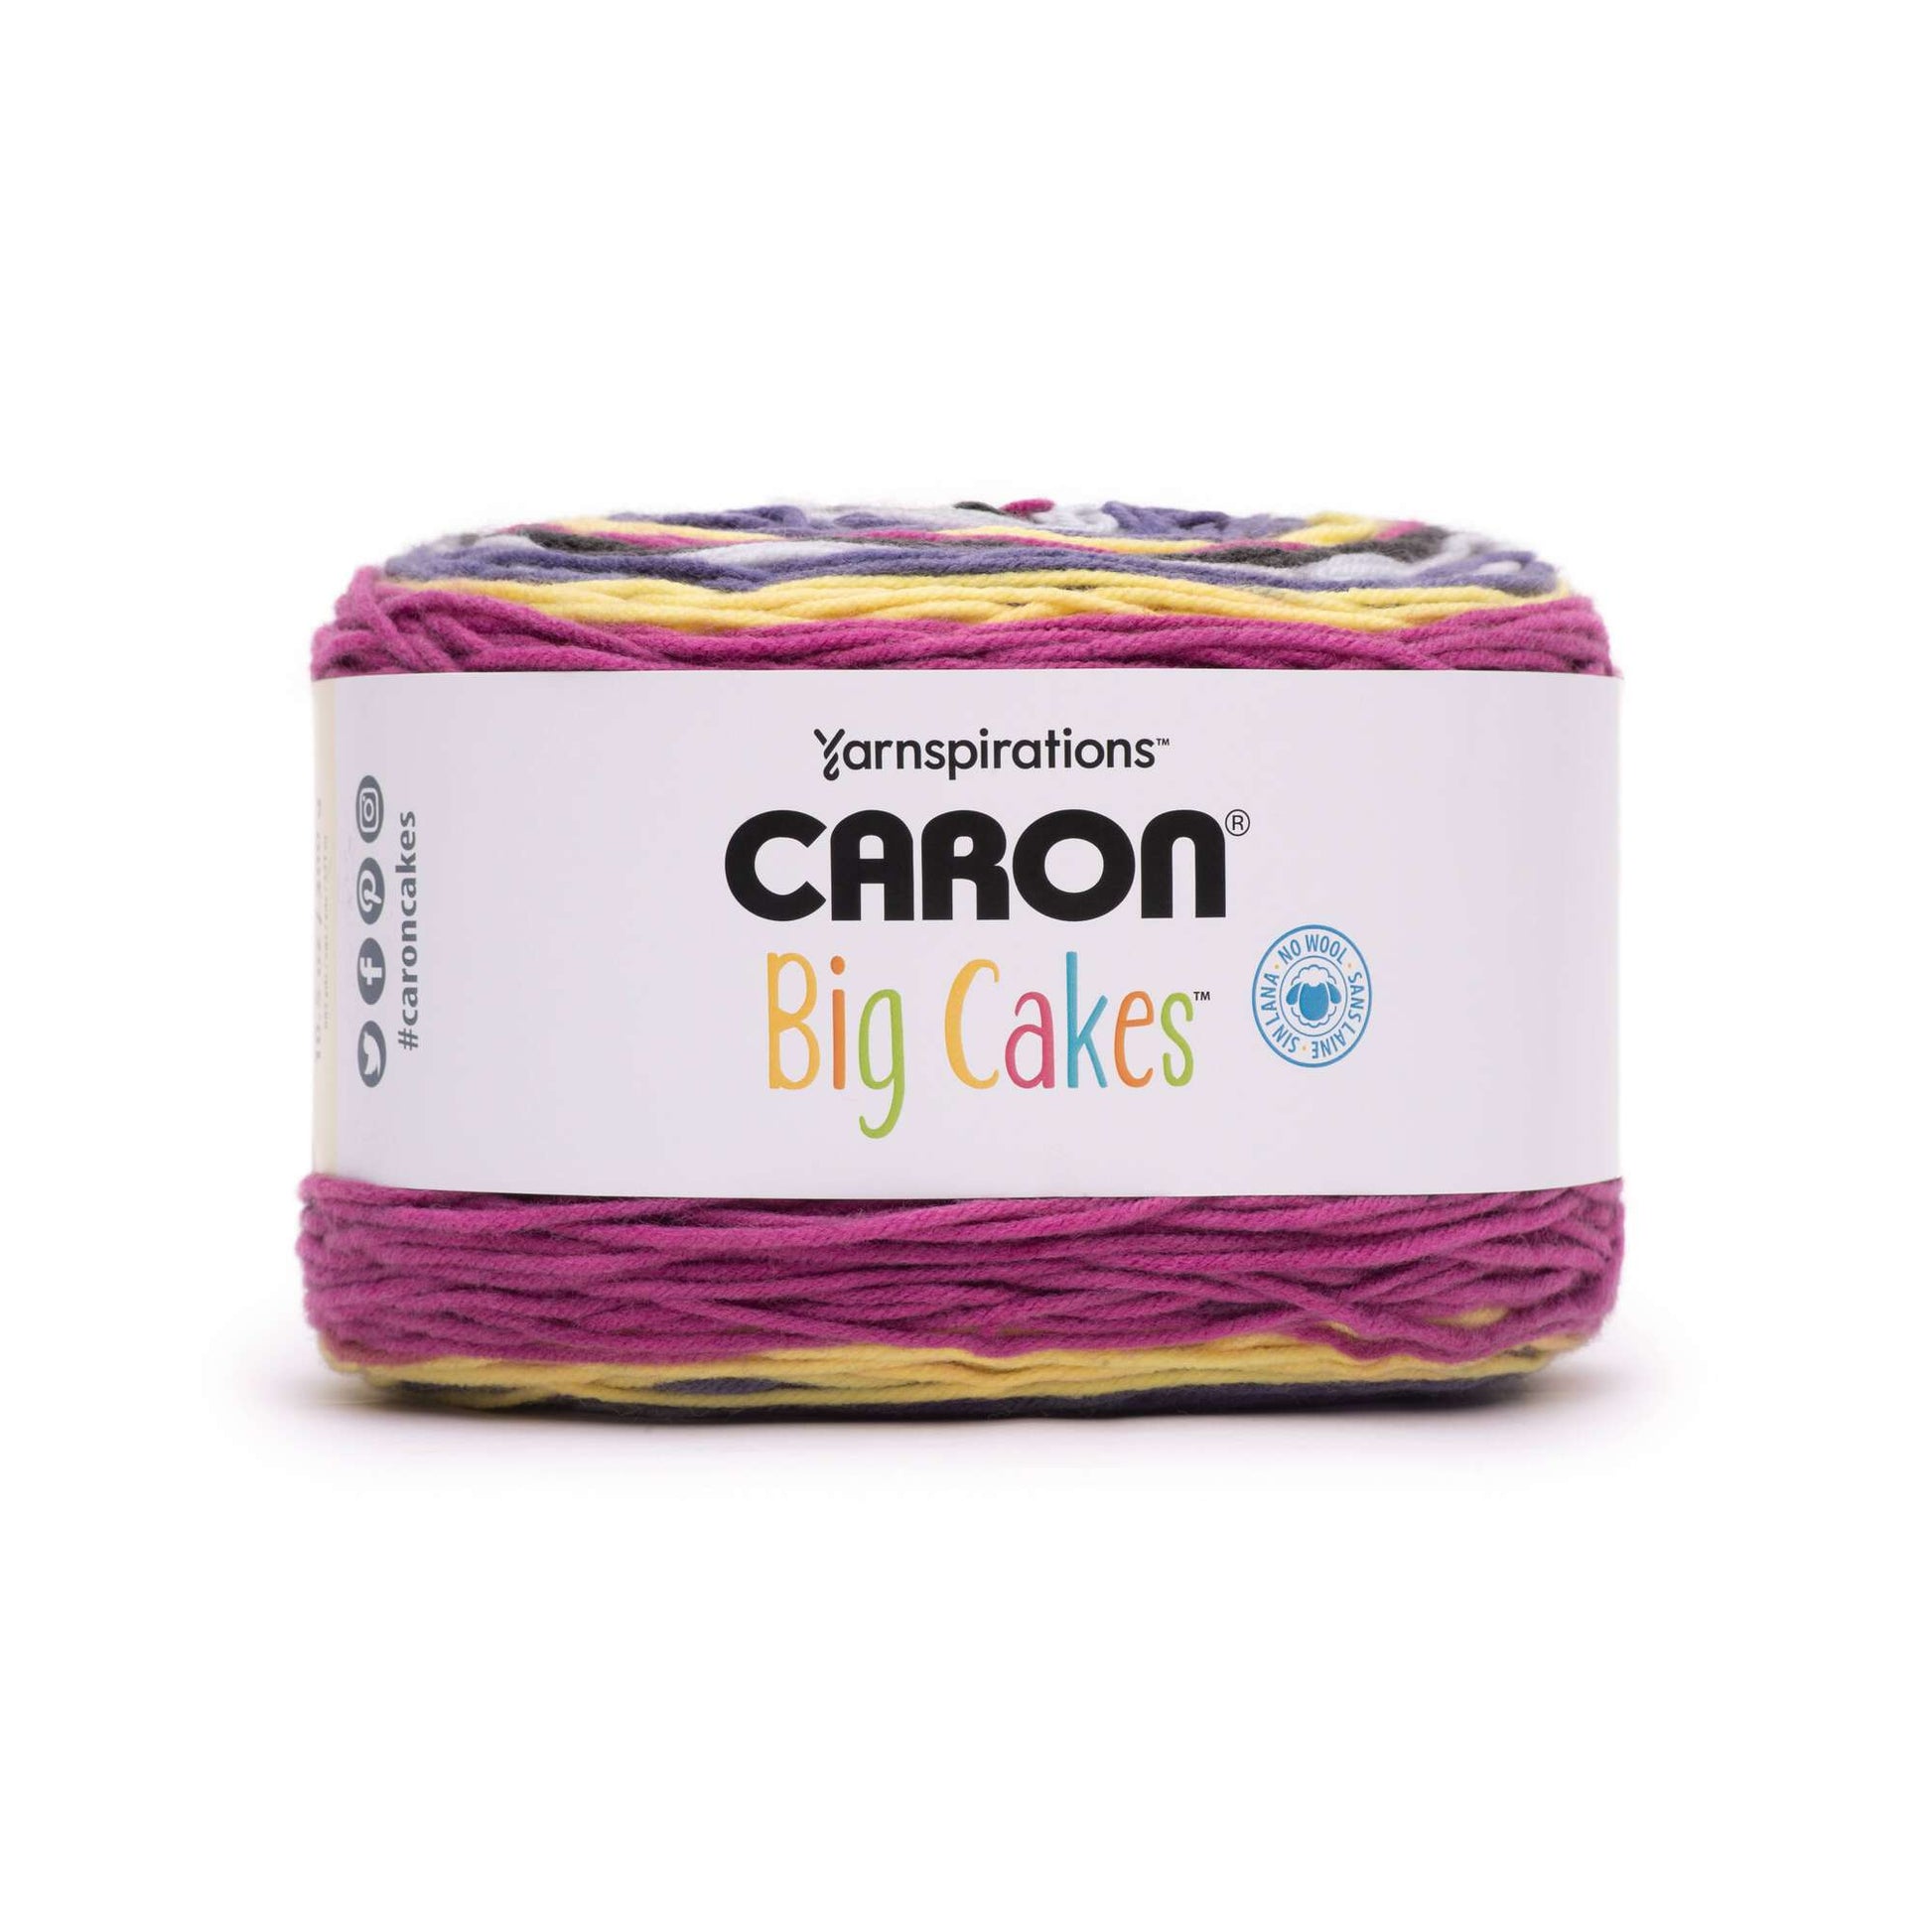 Caron Big Cakes Yarn